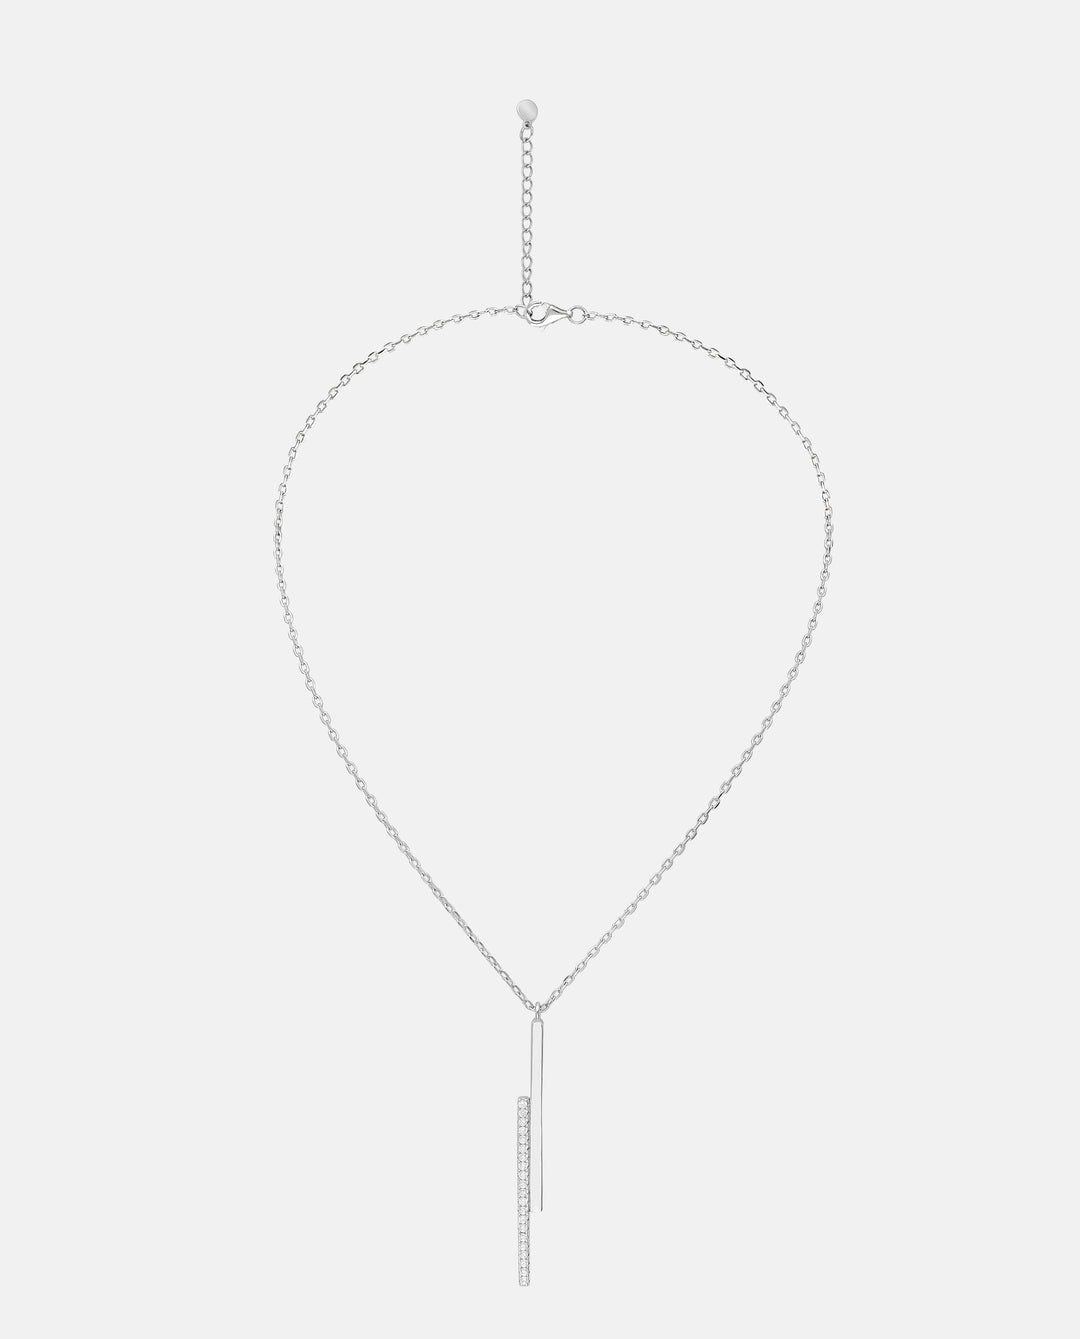 Bar Duet Zircon Pendant .925 Sterling Silver Necklace